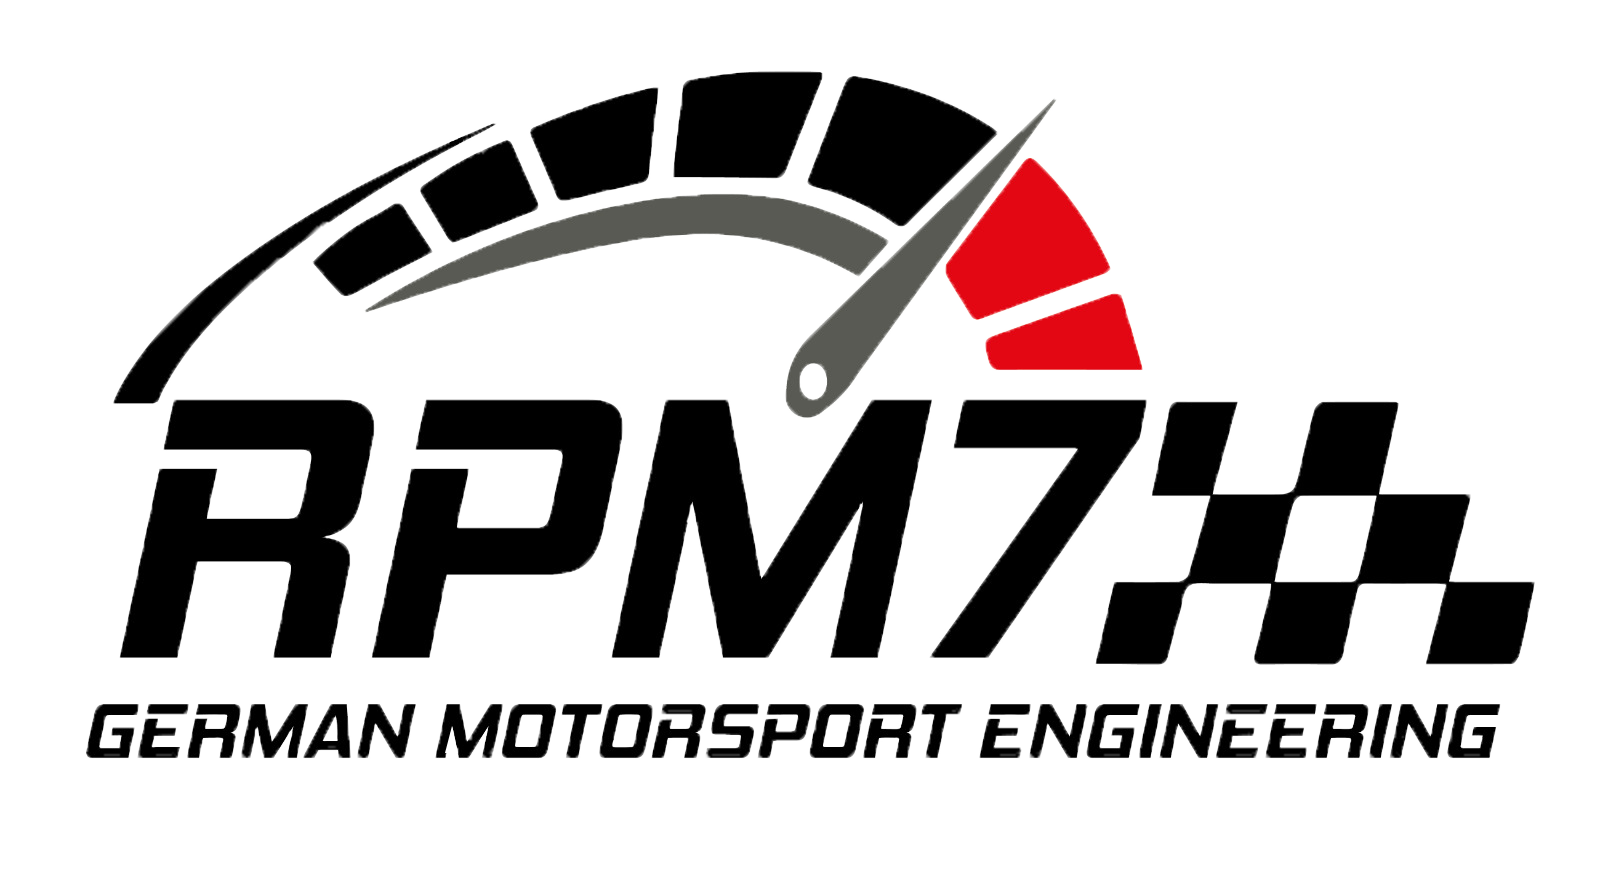 RPM7 Motorsport